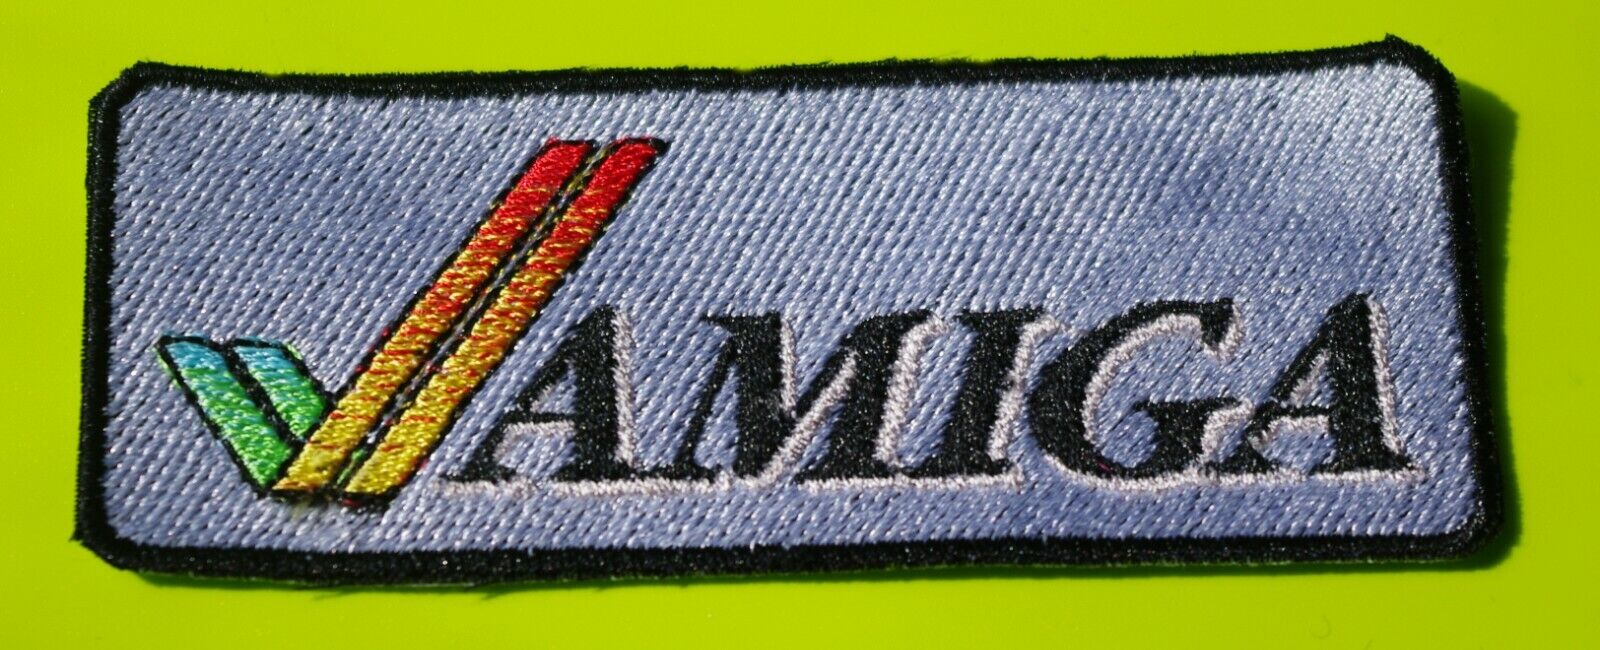 Amiga Logo custom embroidered patch. Original Design by Alleykat.